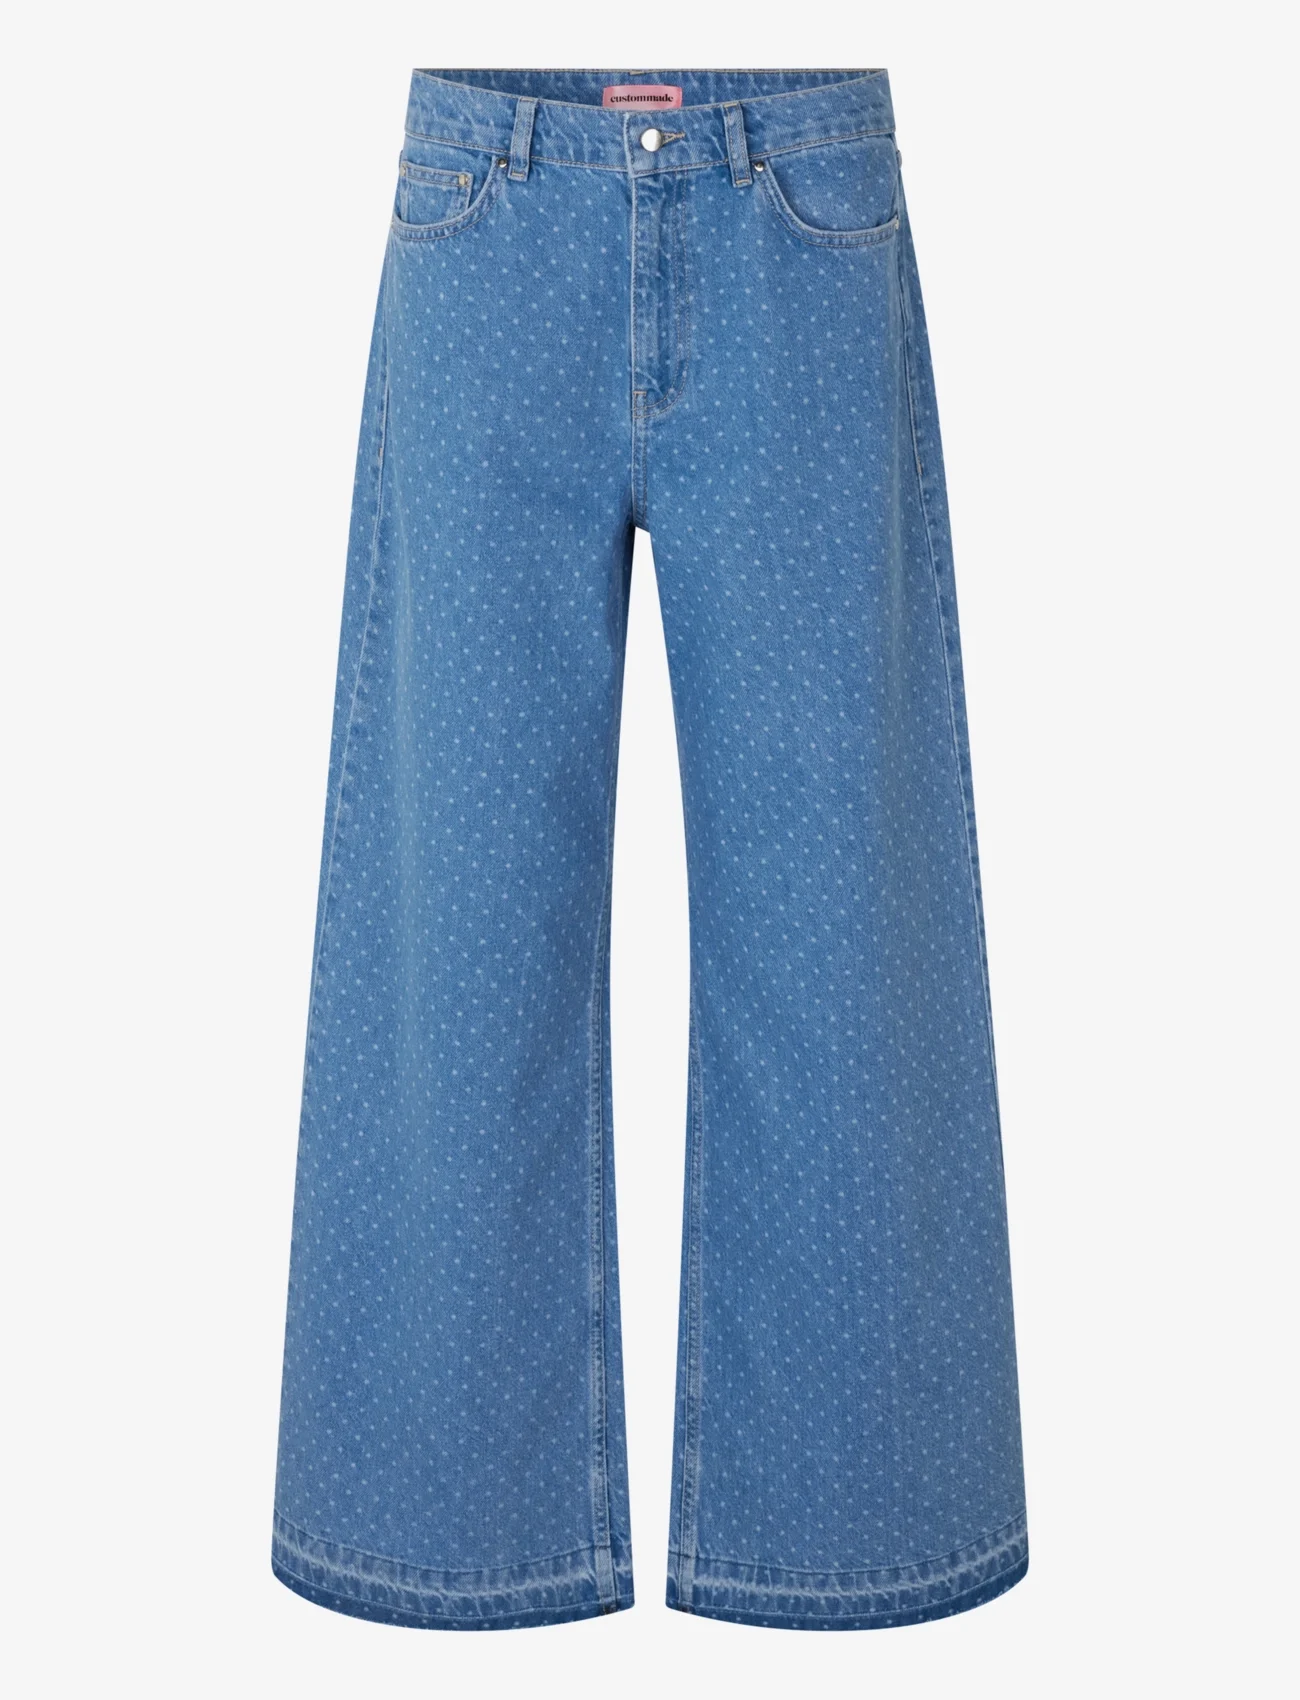 Custommade - Oteca Dots - brede jeans - 414 dusty blue - 0